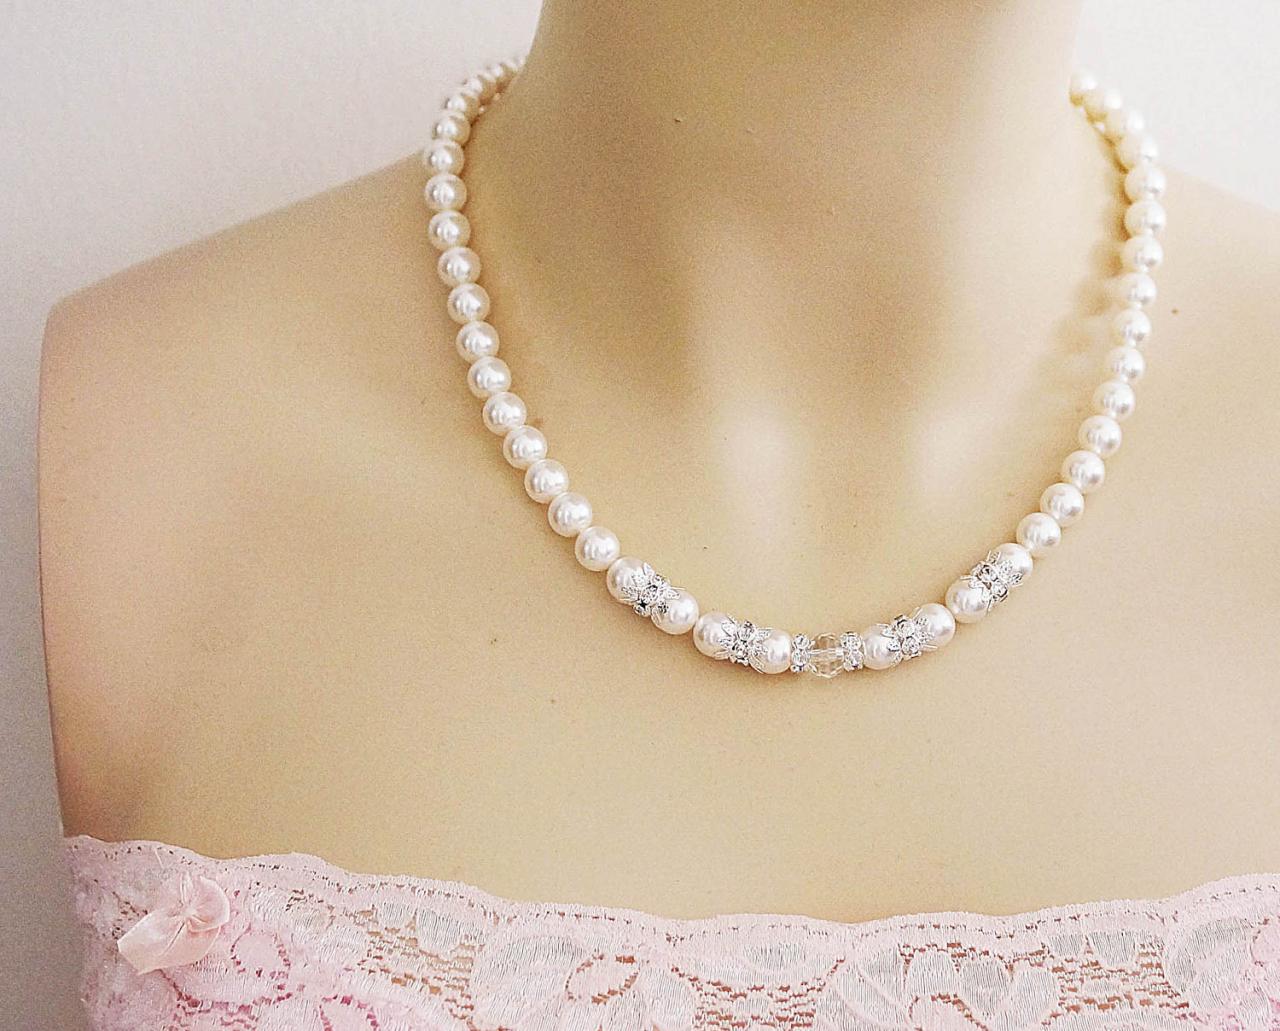 Wedding Jewelry Bridal Necklace Elegant Crystal White Swarovski Pearls With Rhinestone Spacer Beads